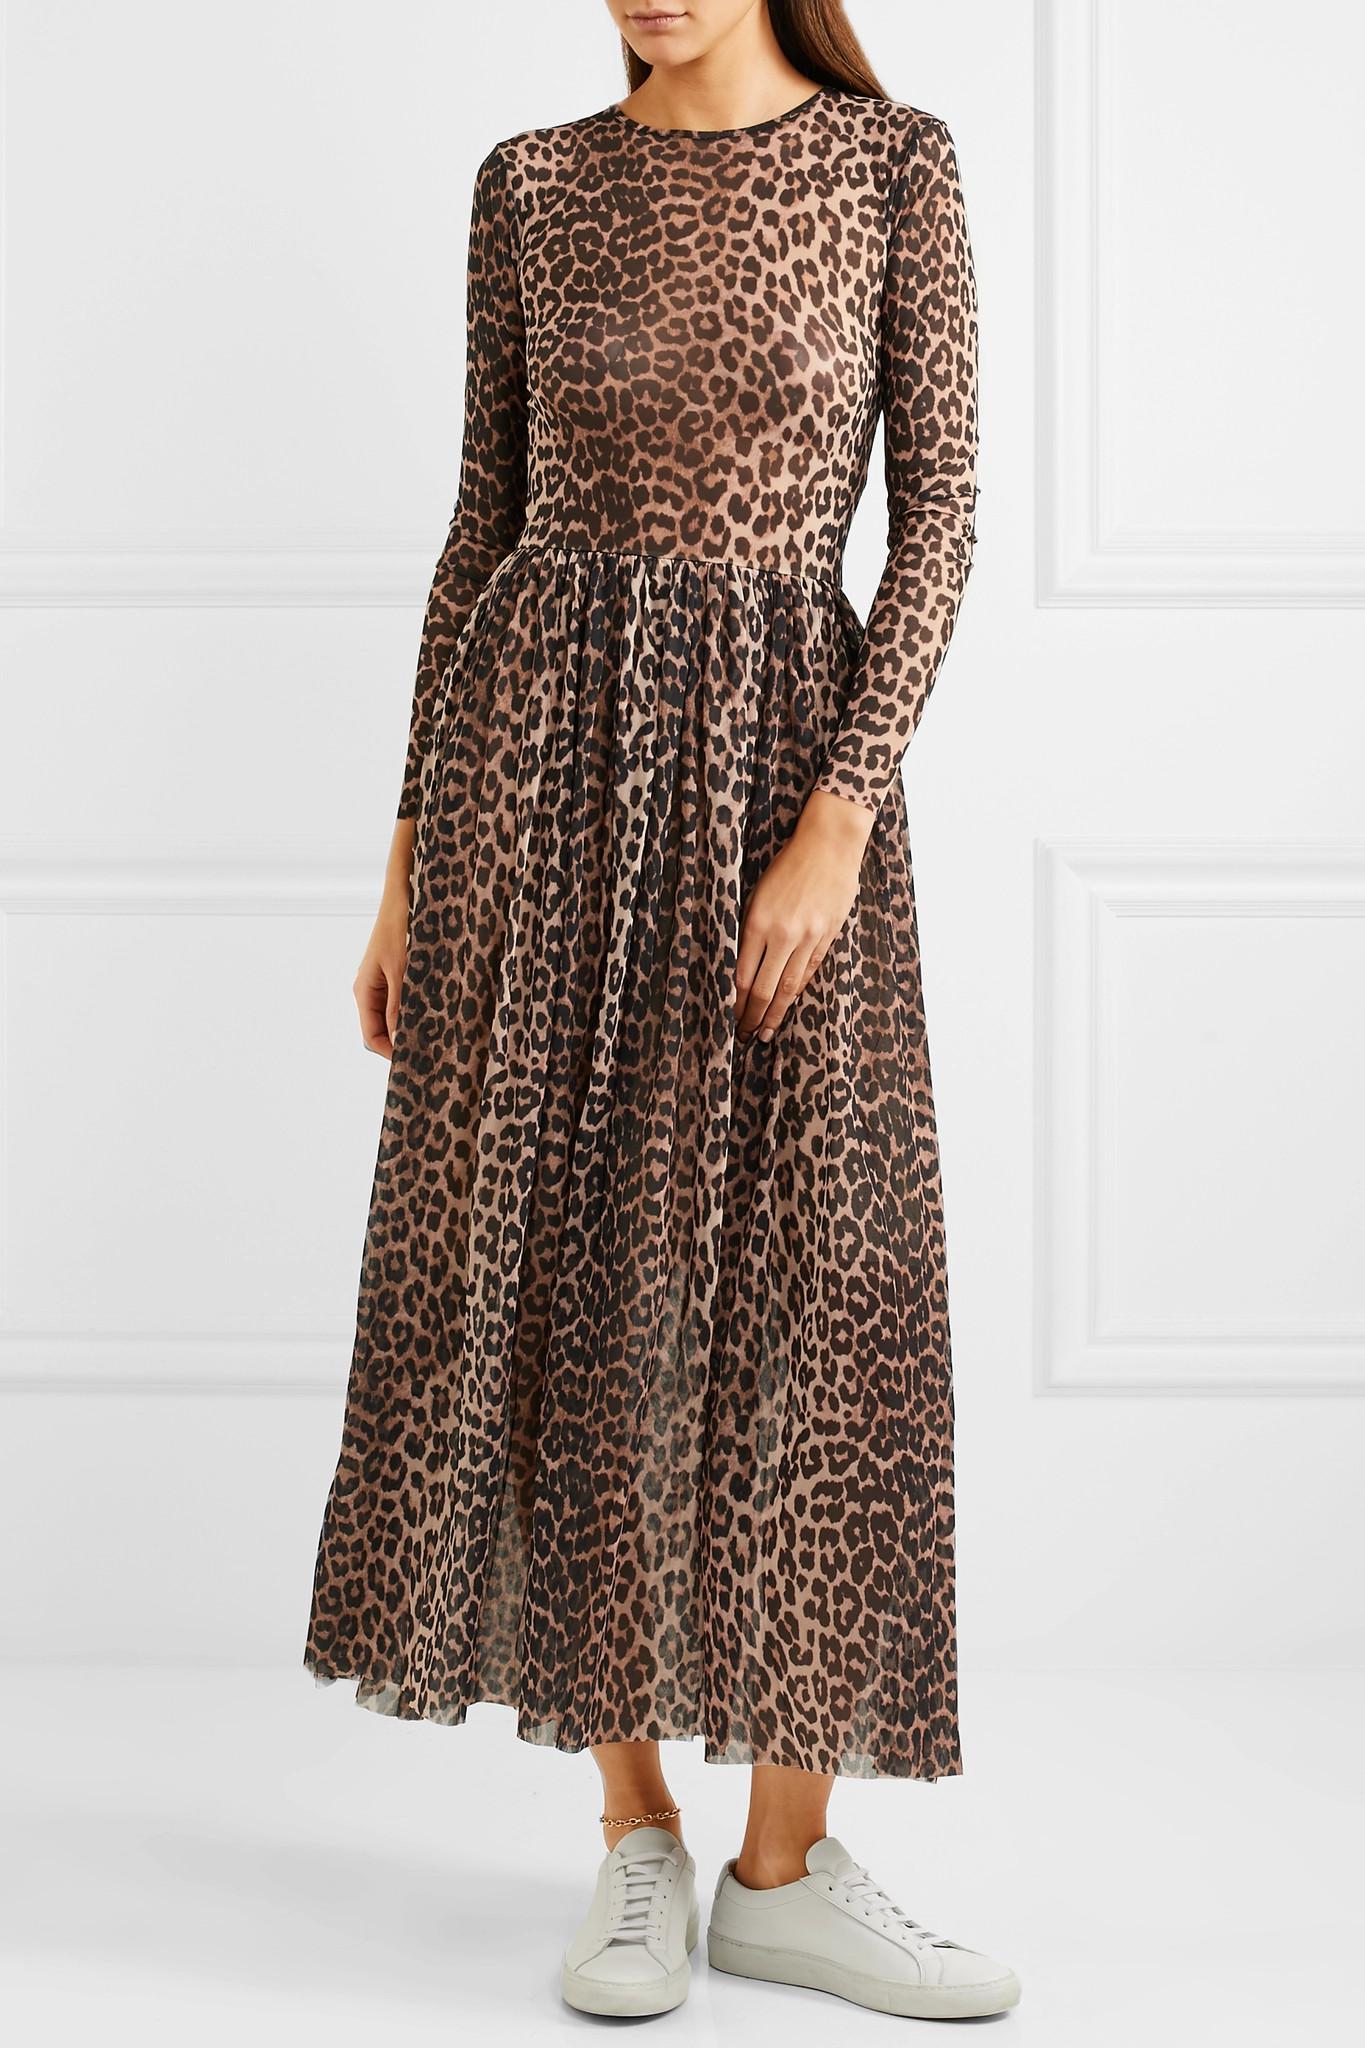 Ganni Tilden Leopard-print Stretch-mesh Dress in Leopard Print (Brown) -  Lyst